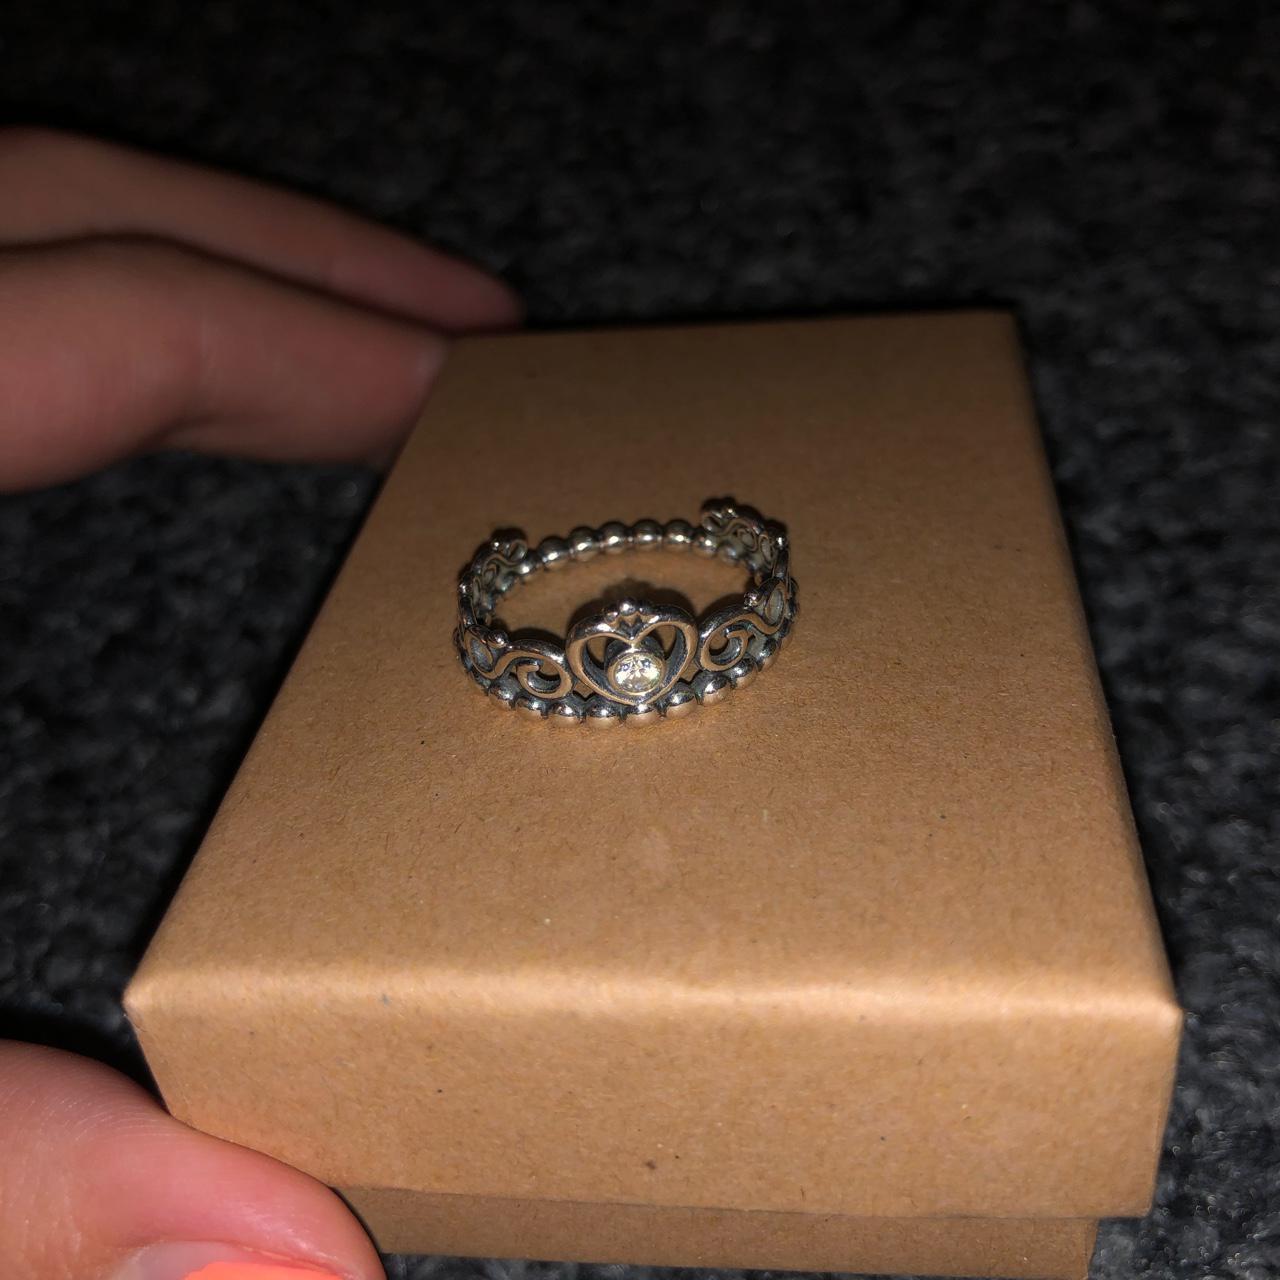 The new princess pandora ring | Pandora rings princess, Pandora bracelet  charms, Pandora jewelry charms